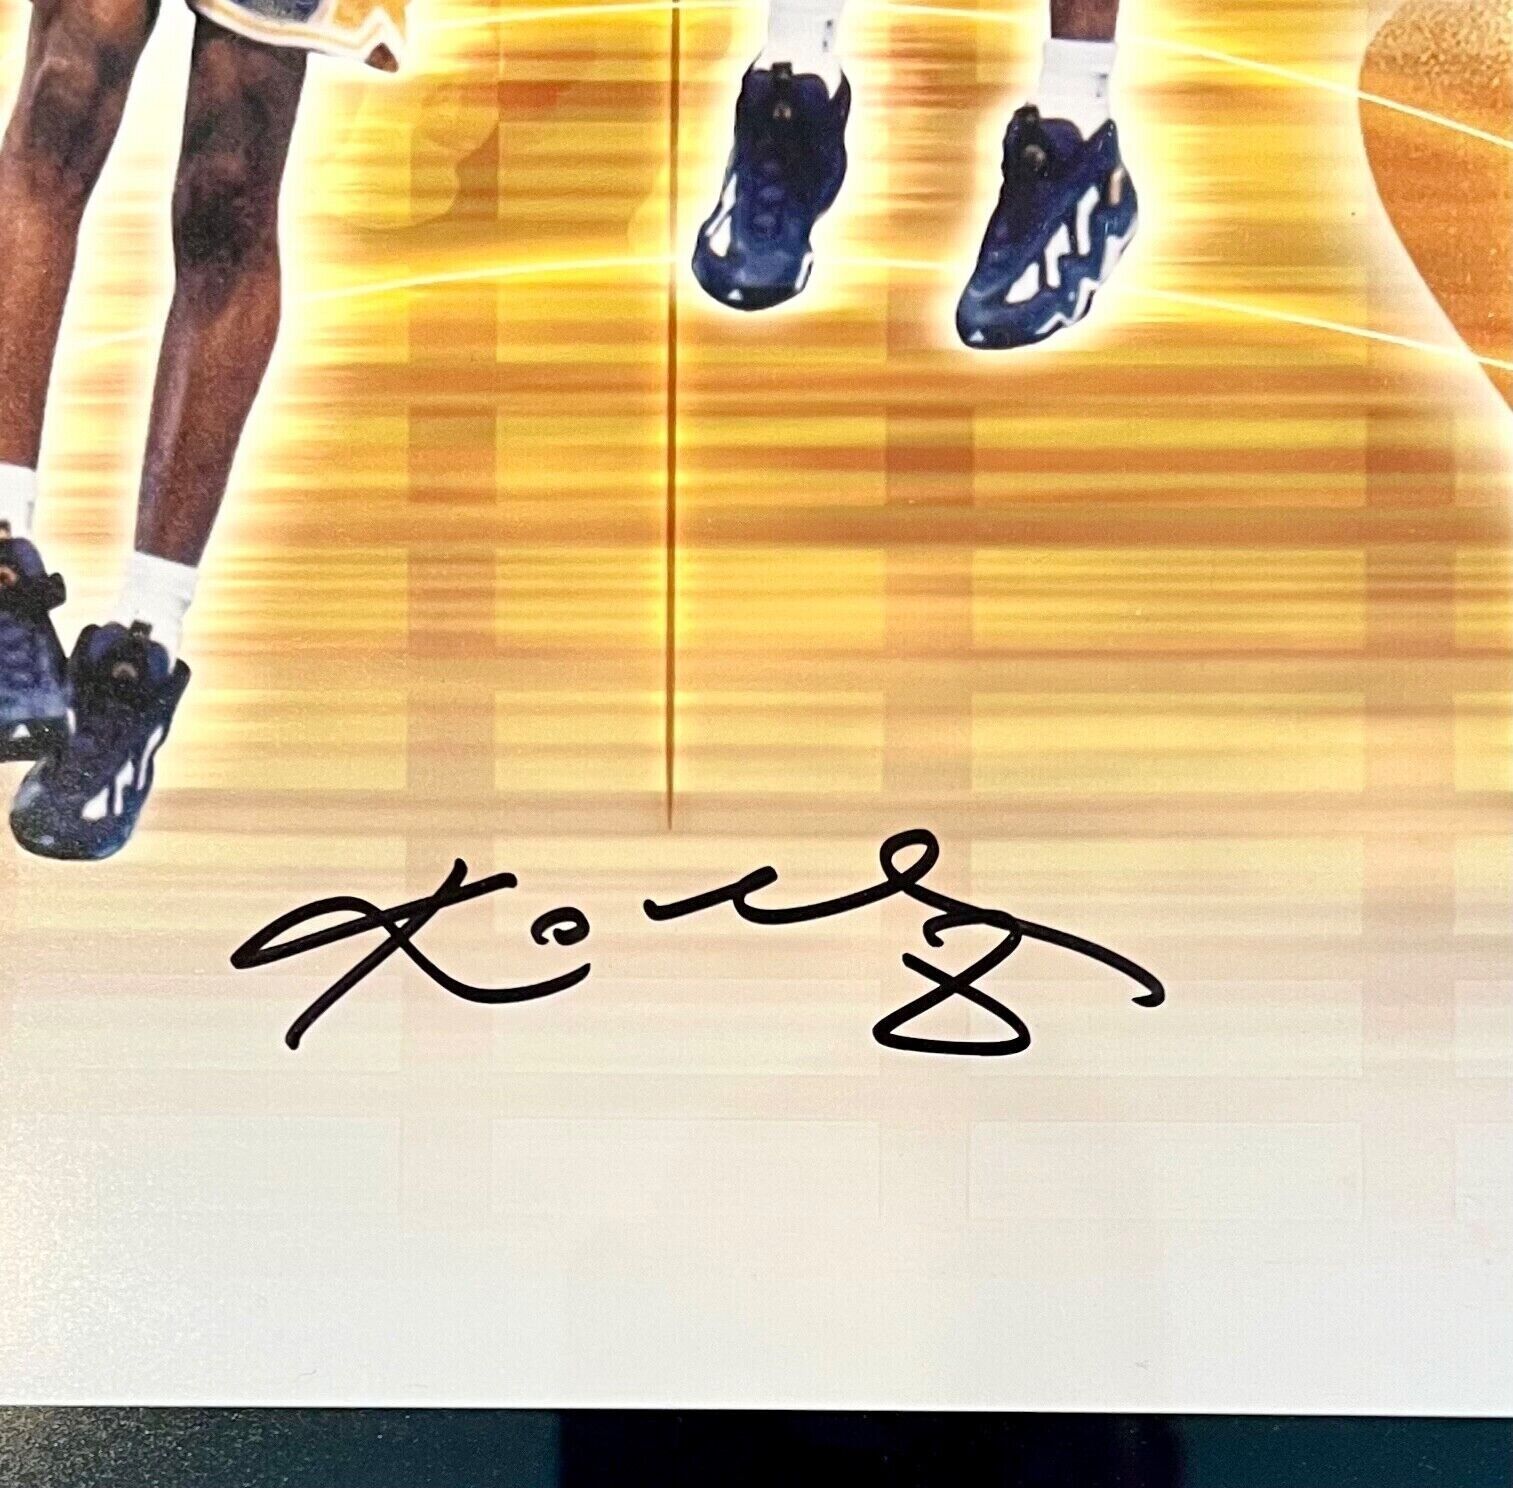 Rookie Kobe Bryant Signed Photo, 1997 Slam Dunk Contest Champion. Upper Deck UDA